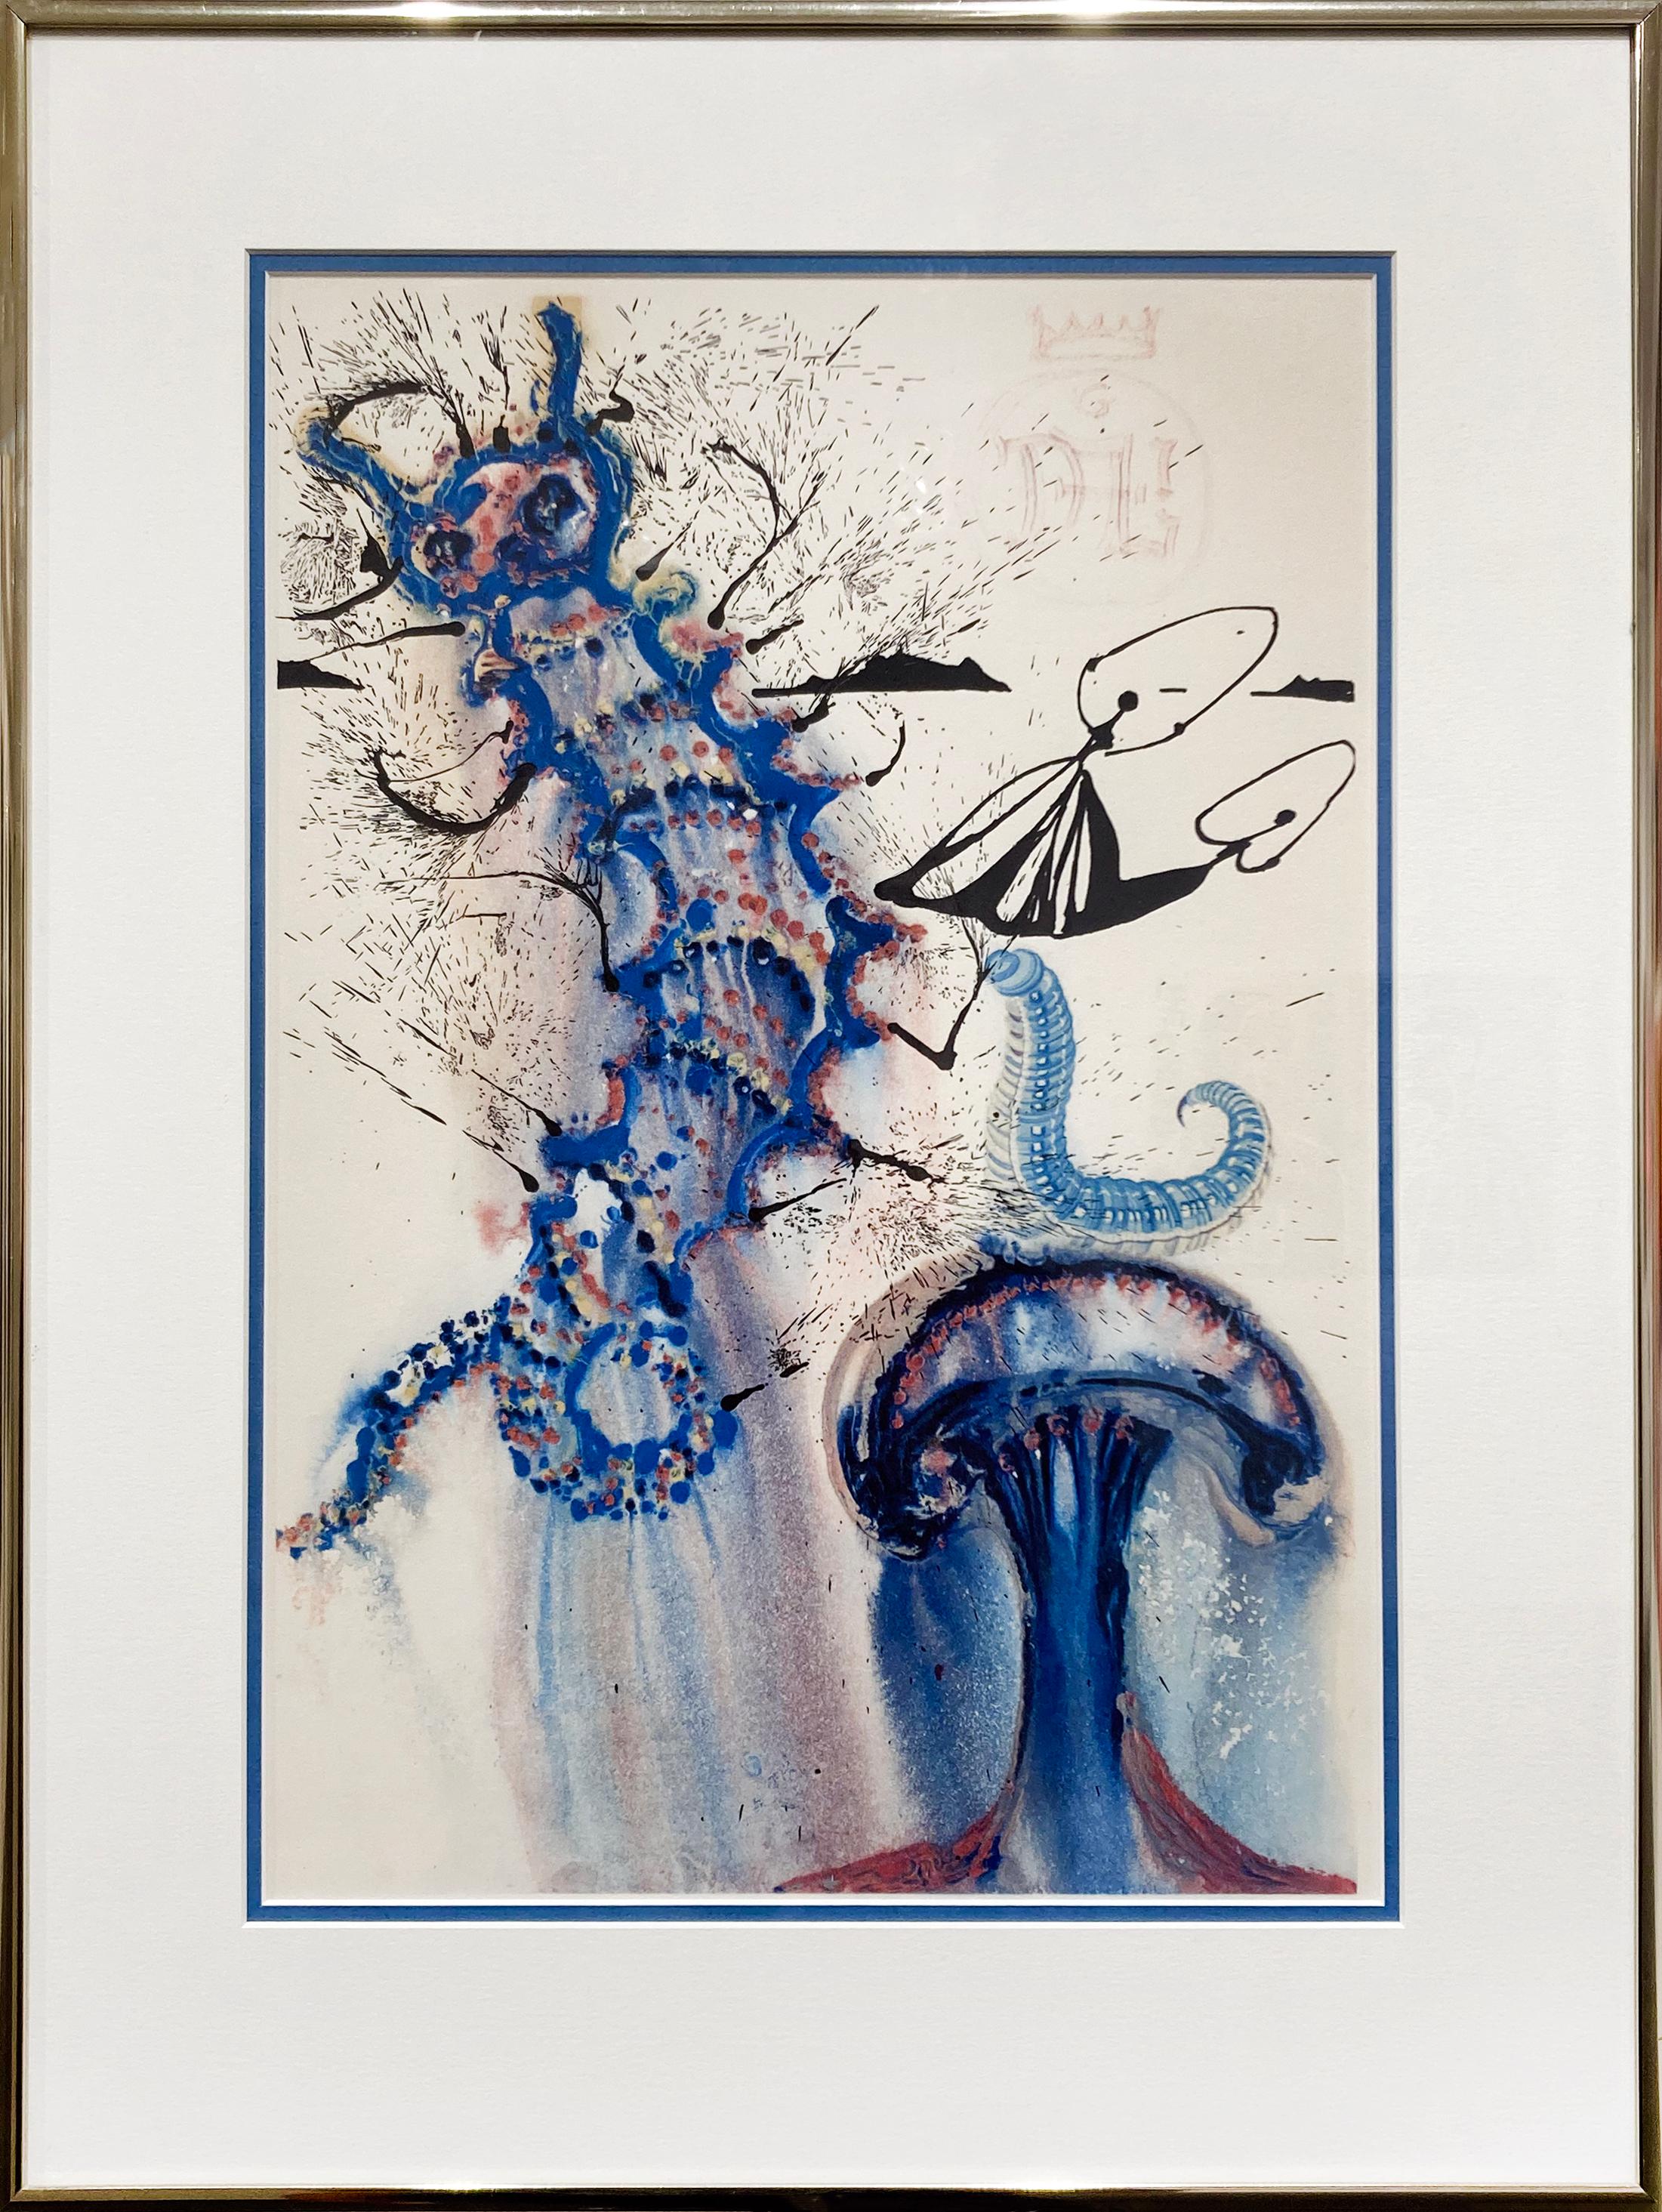 Advice From a Caterpillar - Print by Salvador Dalí